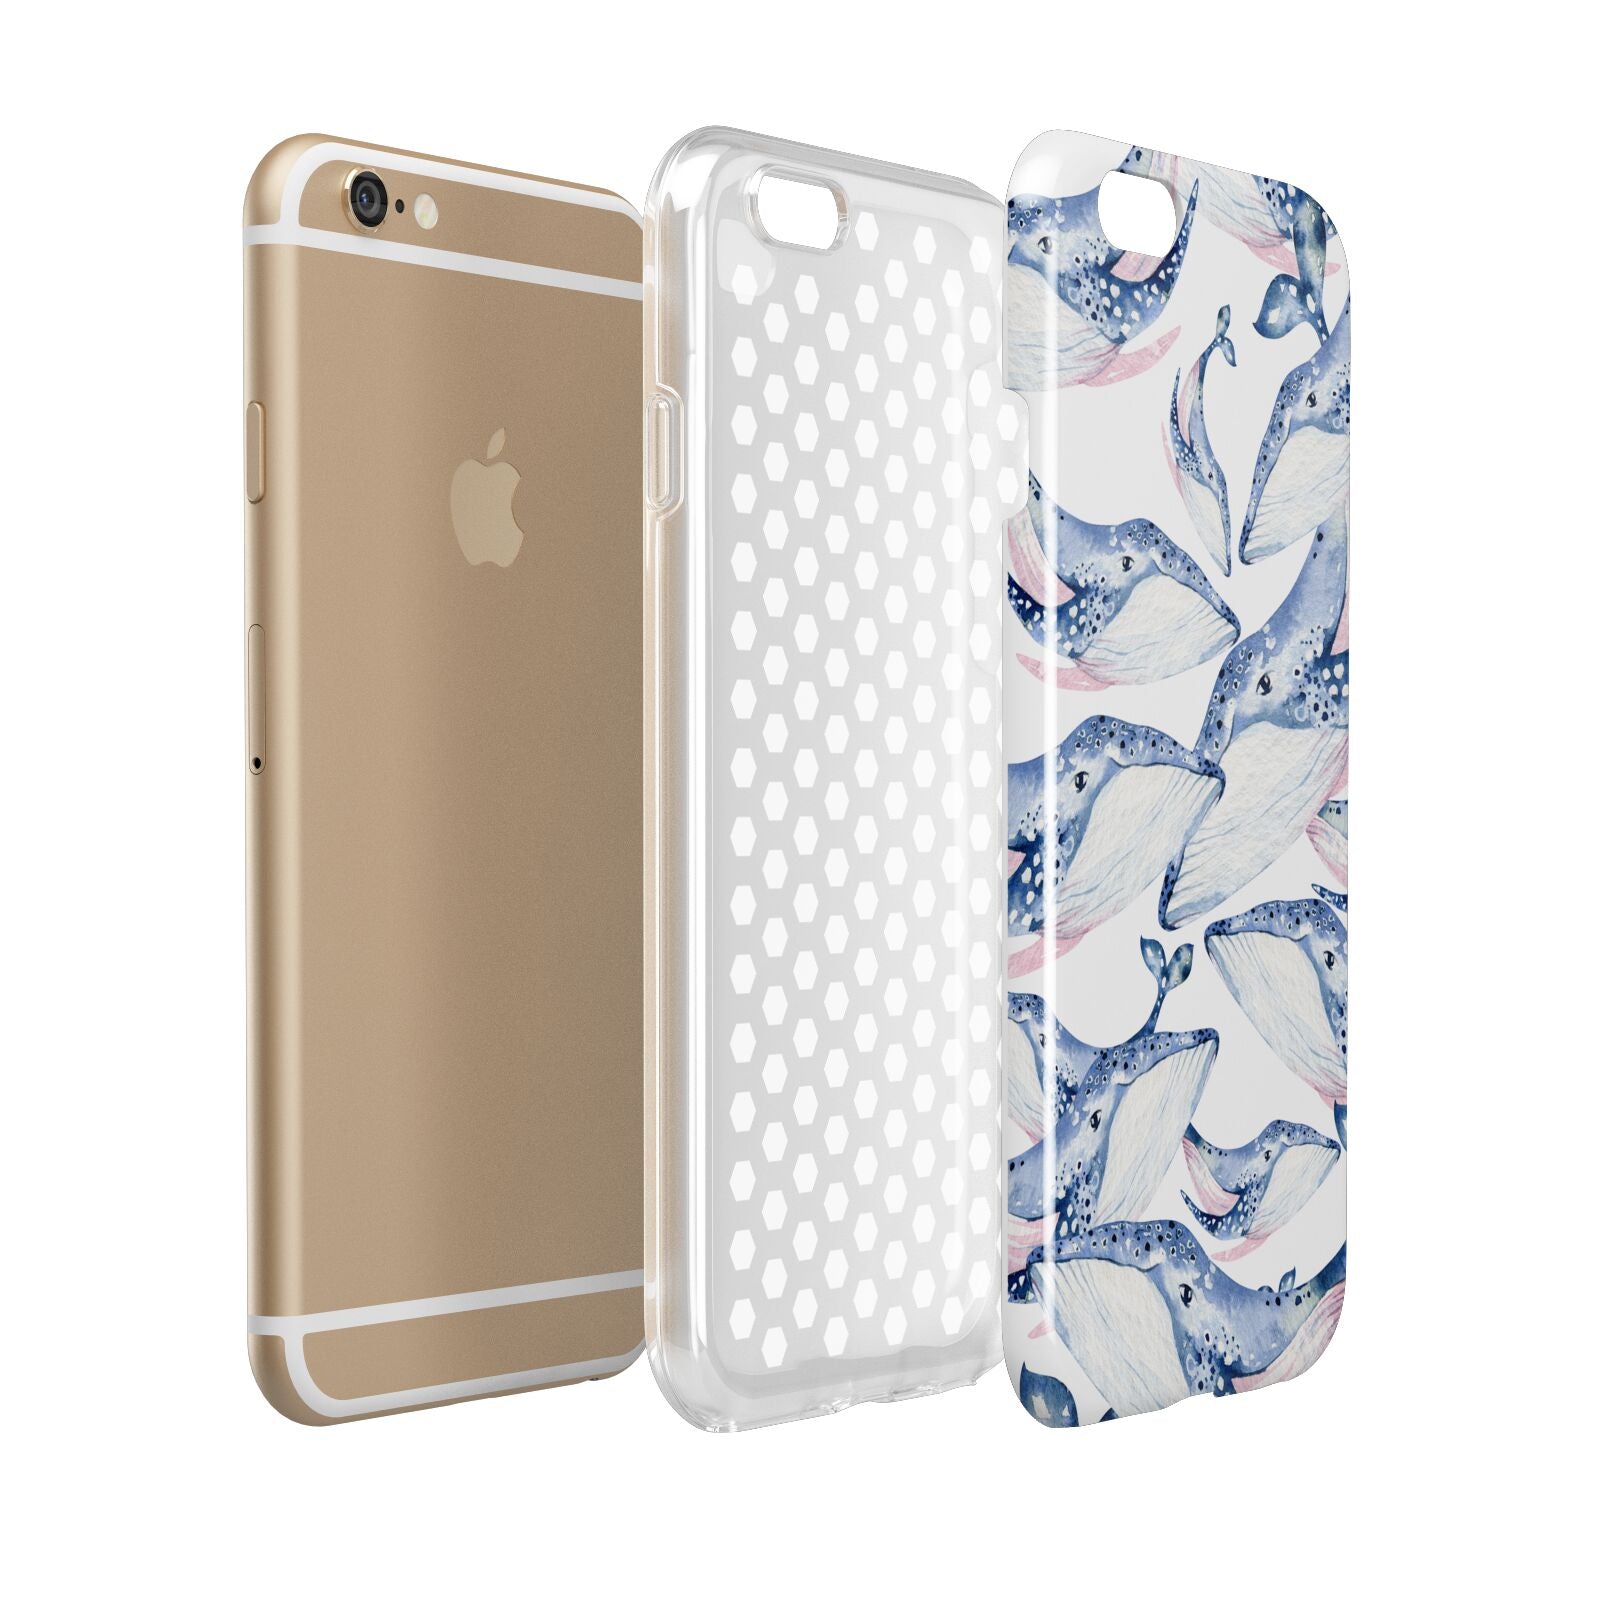 Whale Apple iPhone 6 3D Tough Case Expanded view